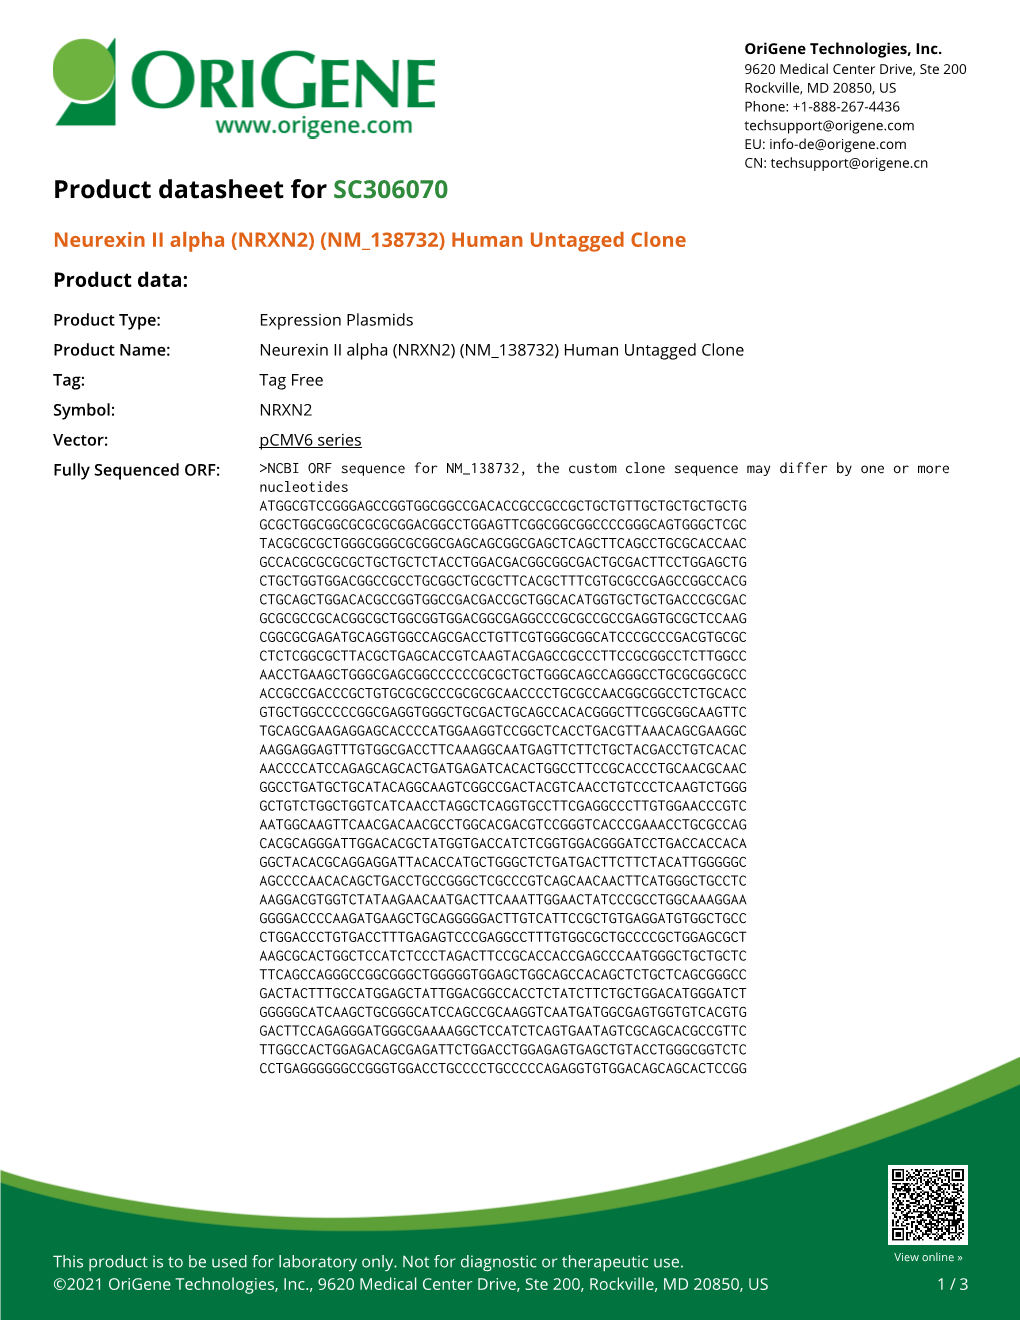 Neurexin II Alpha (NRXN2) (NM 138732) Human Untagged Clone Product Data